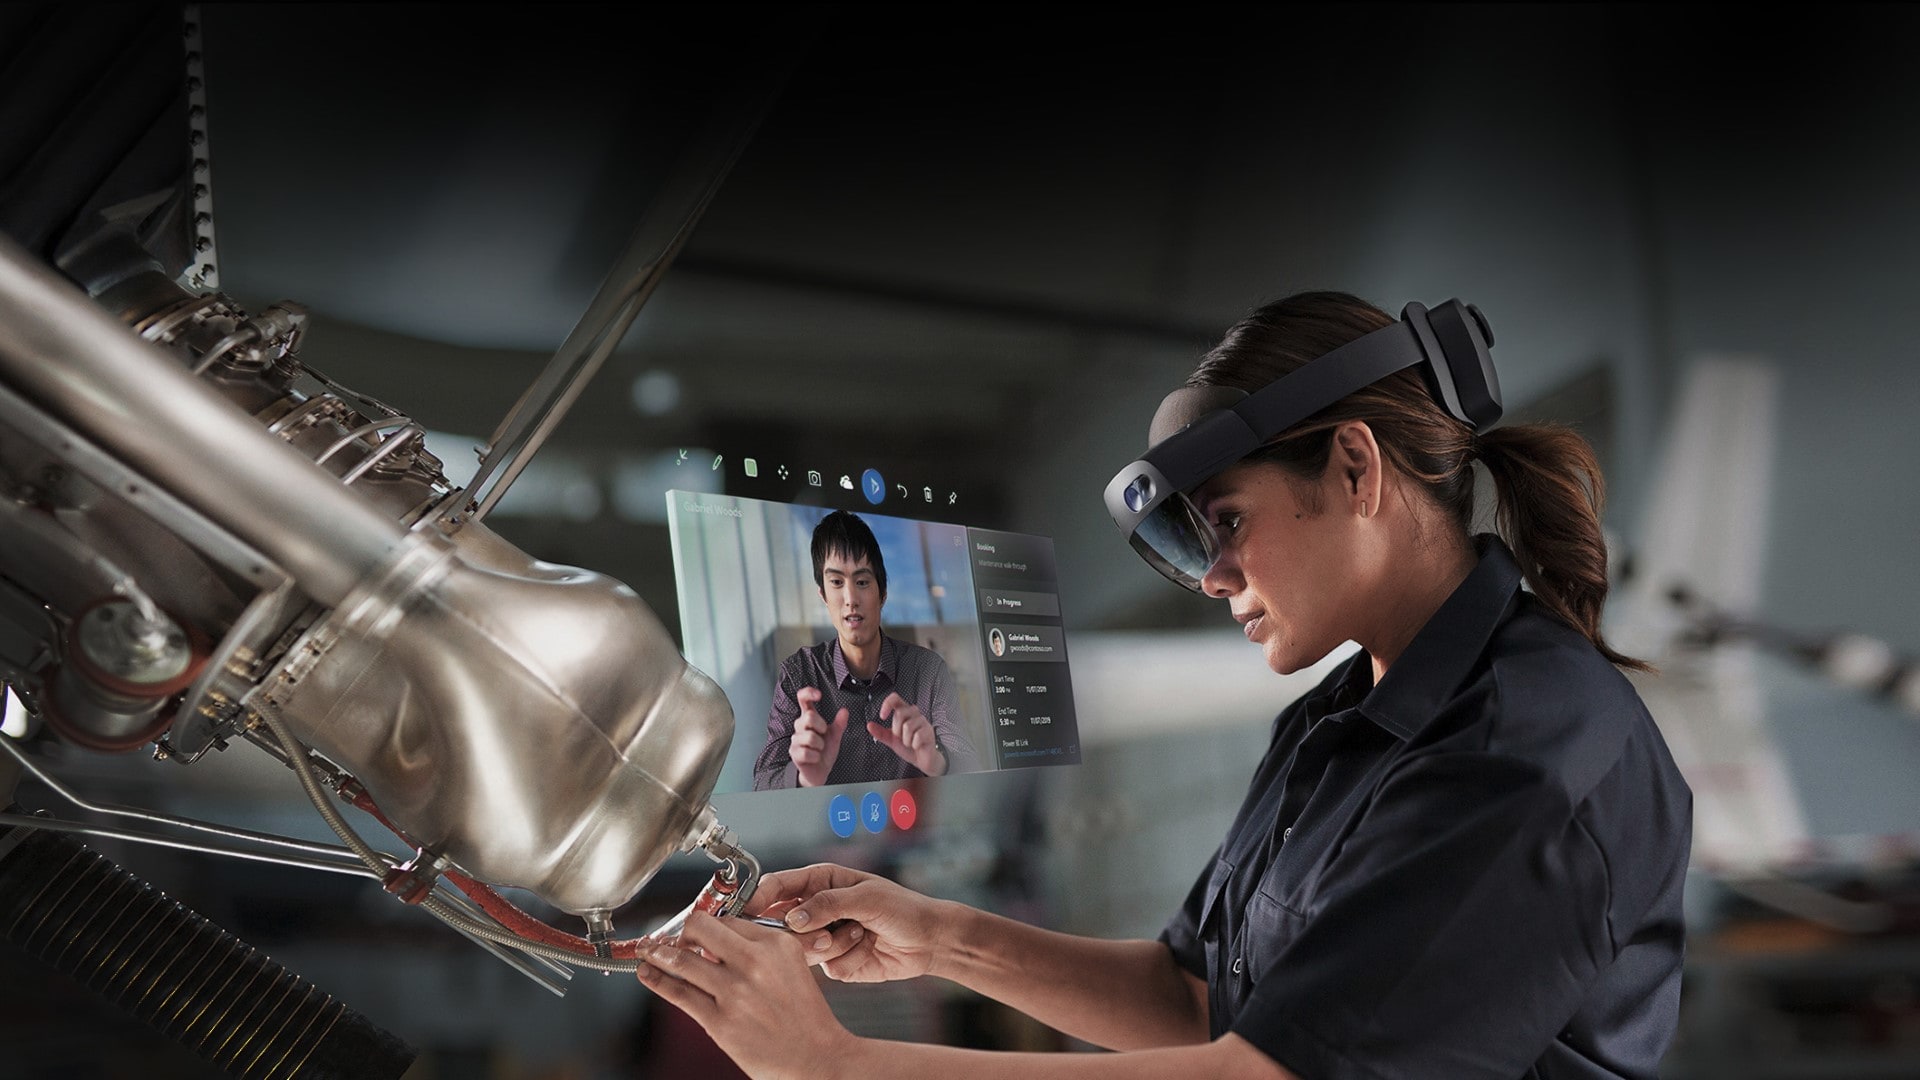 Microsoft's HoloLens 2 gets September launch window